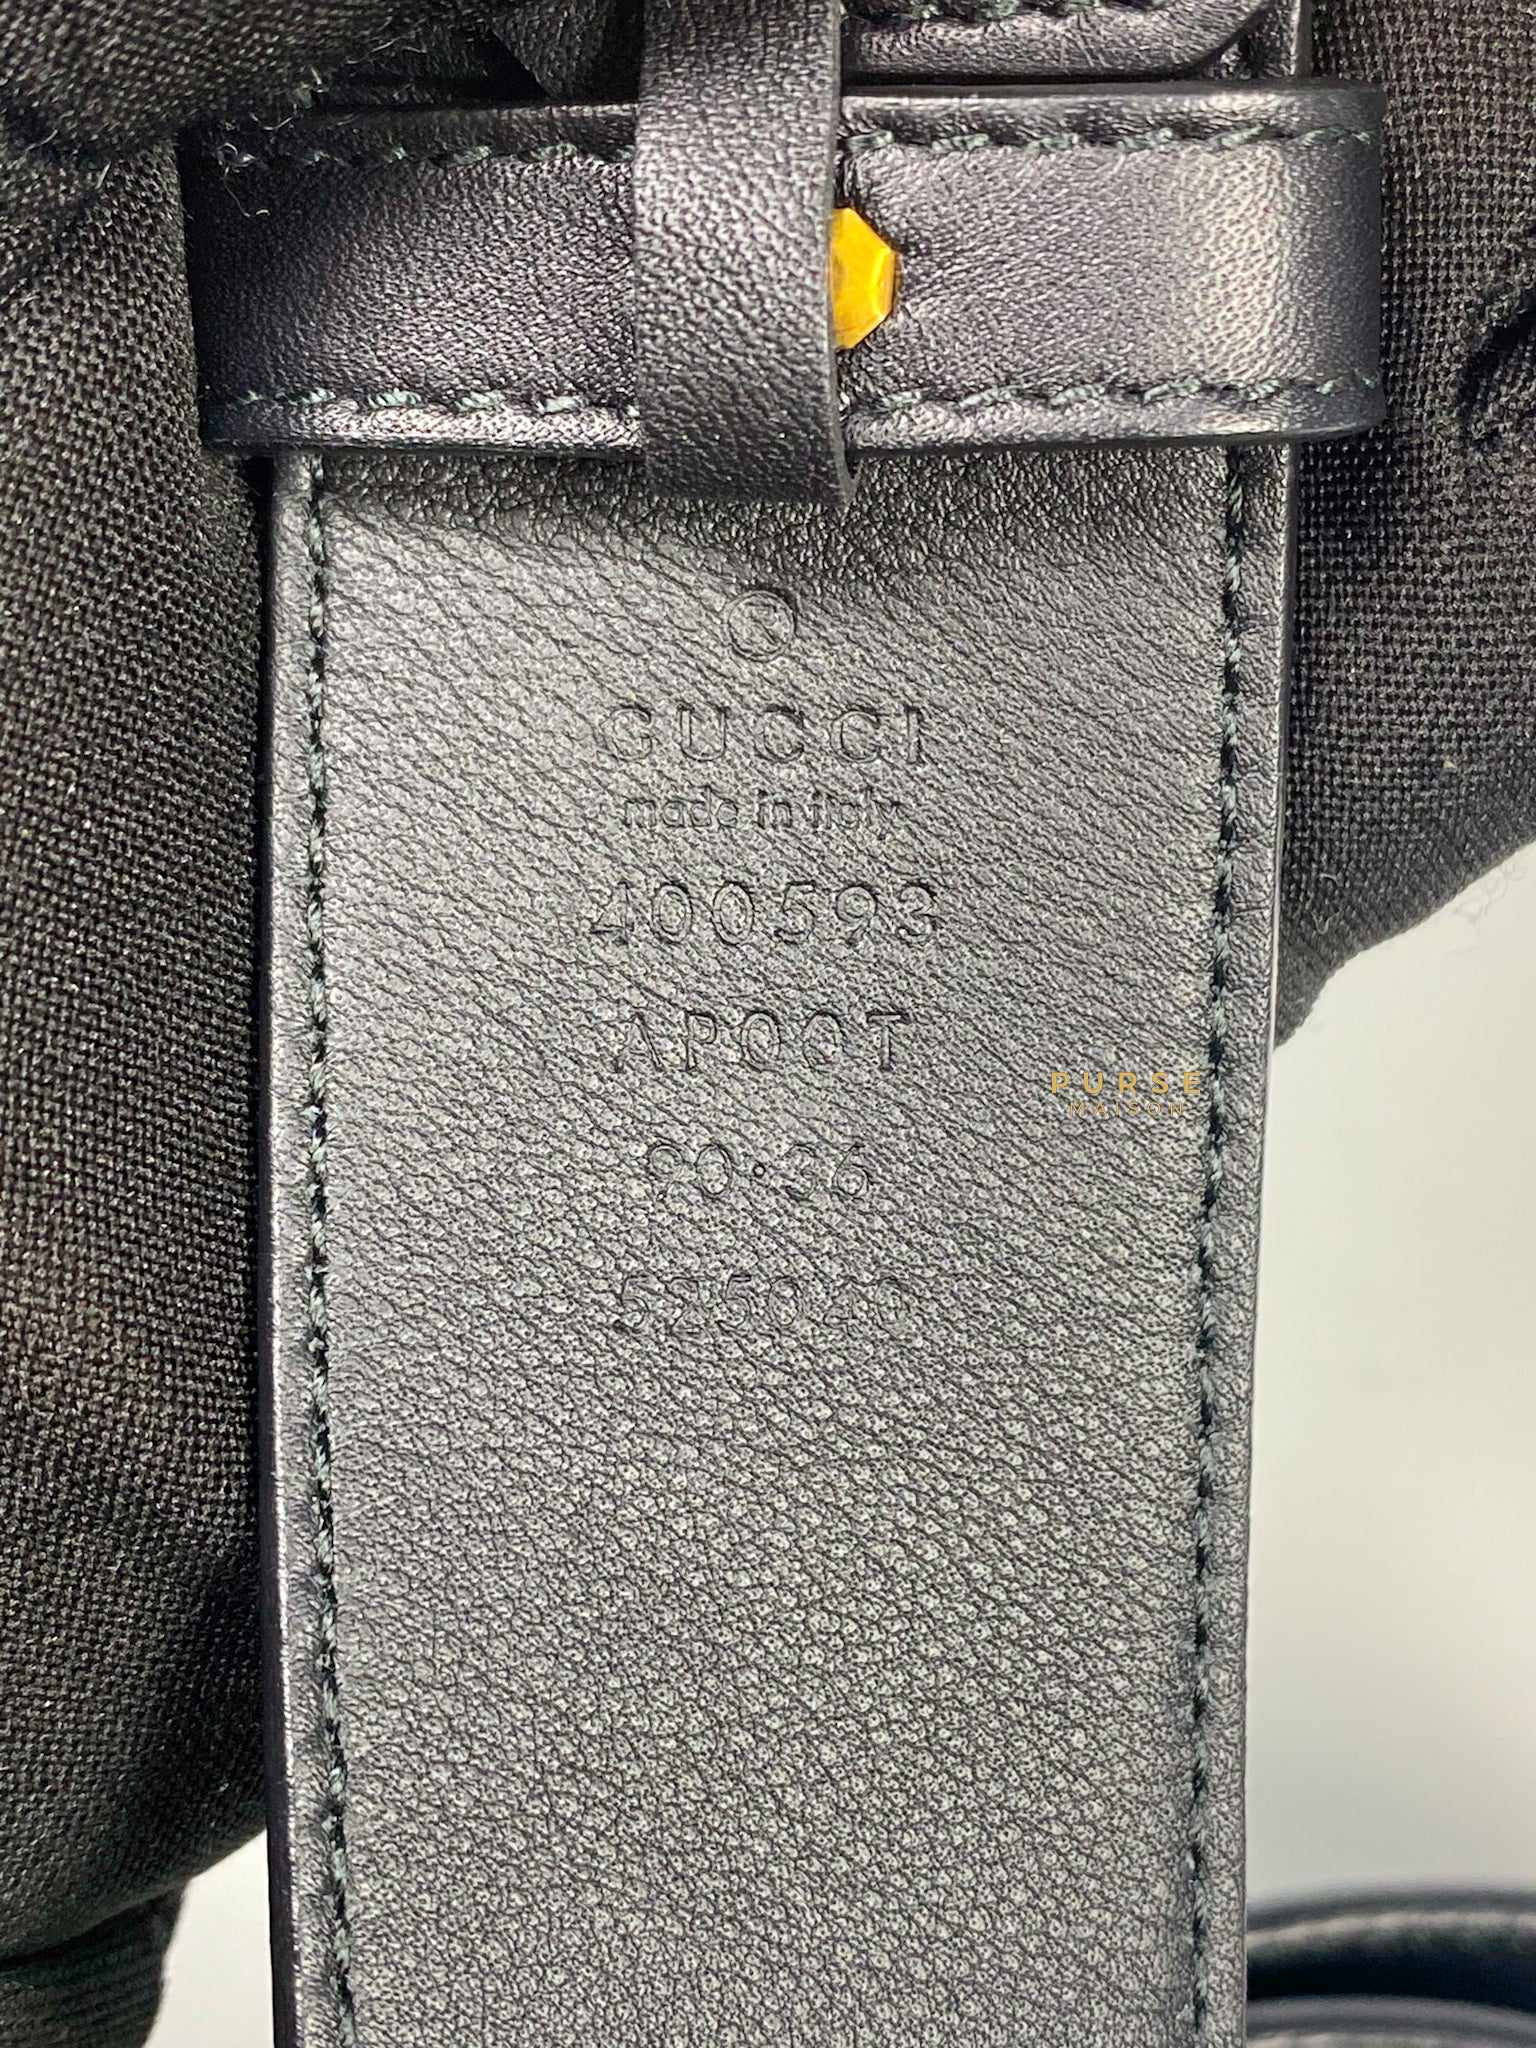 Gucci GG Black Leather Buckle Belt (90cm)